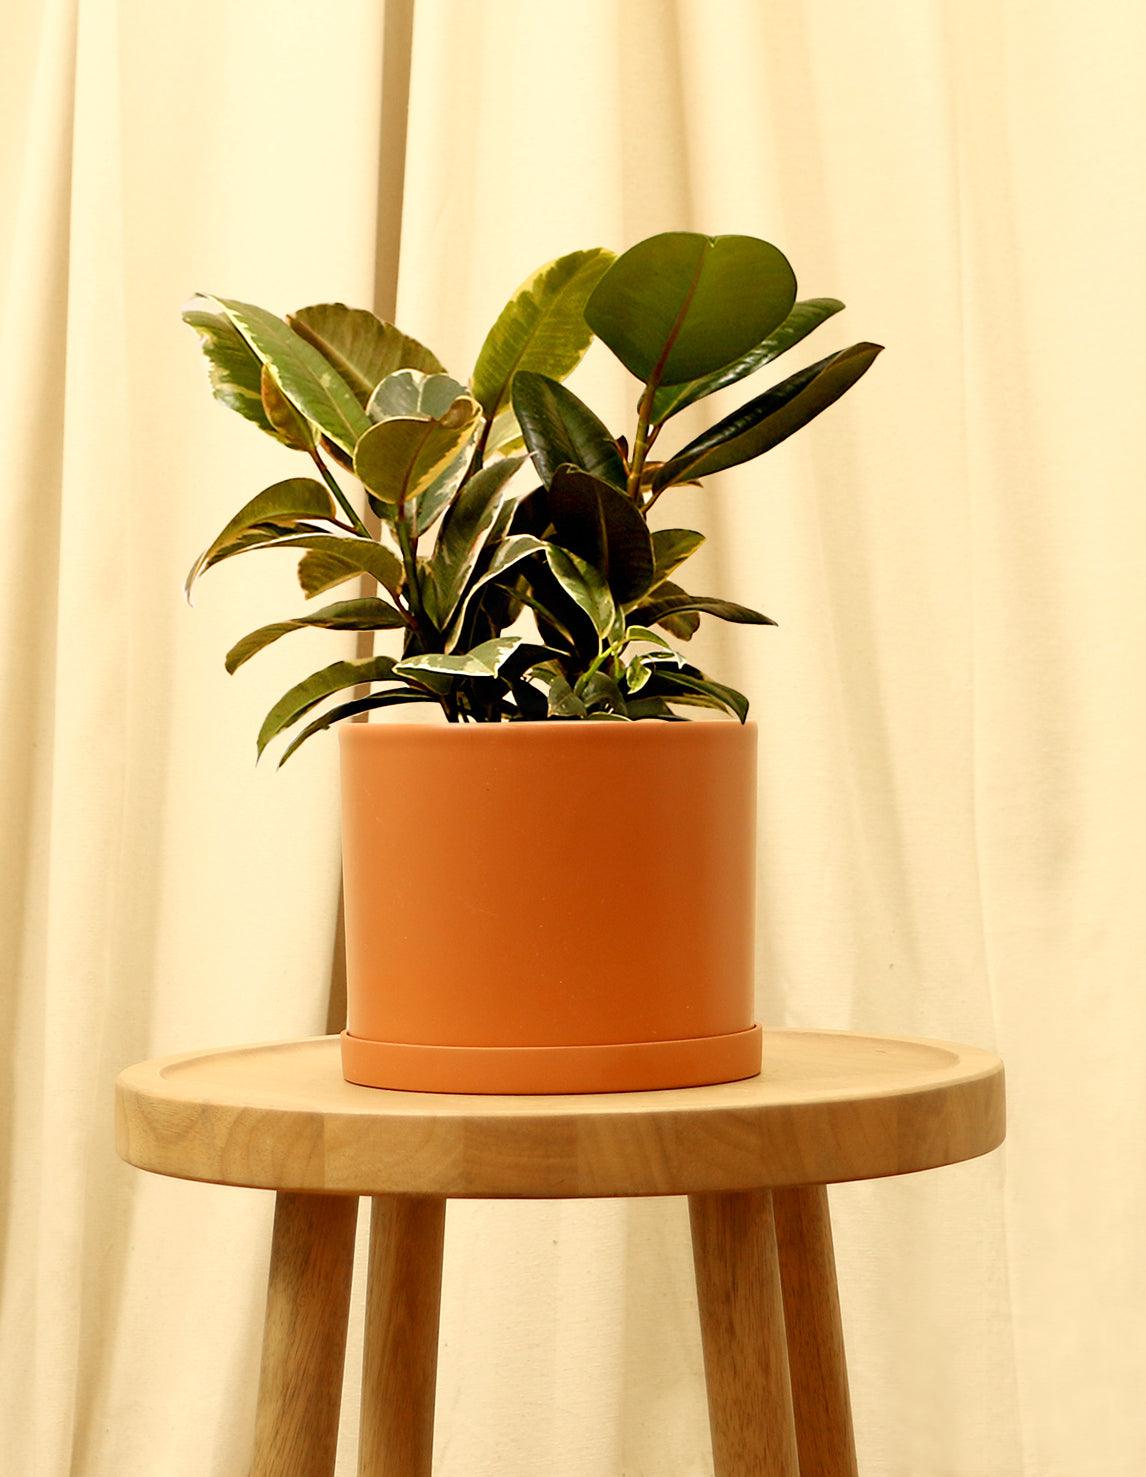 Medium Variegated Rubber Fig Plant in orange pot.